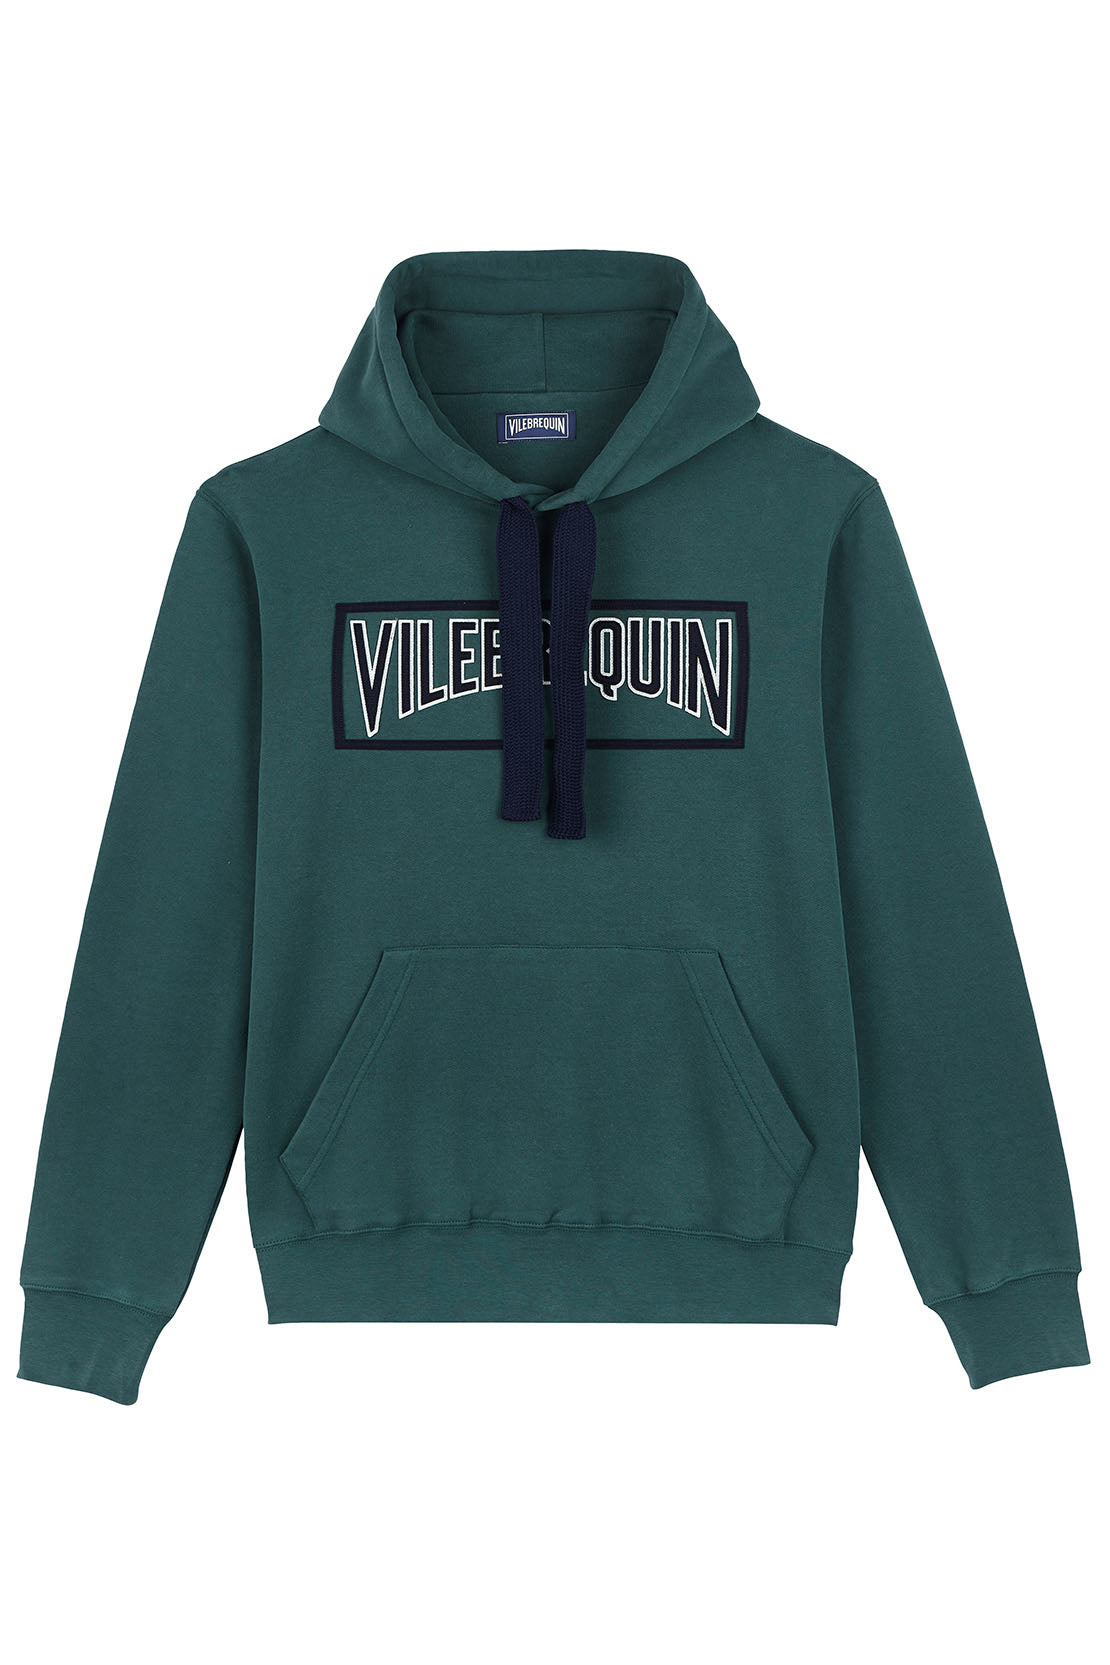 VILEBREQUIN - MARTIN Cotton Hooded Sweatshirt in Pine Green MRIC4P88-471